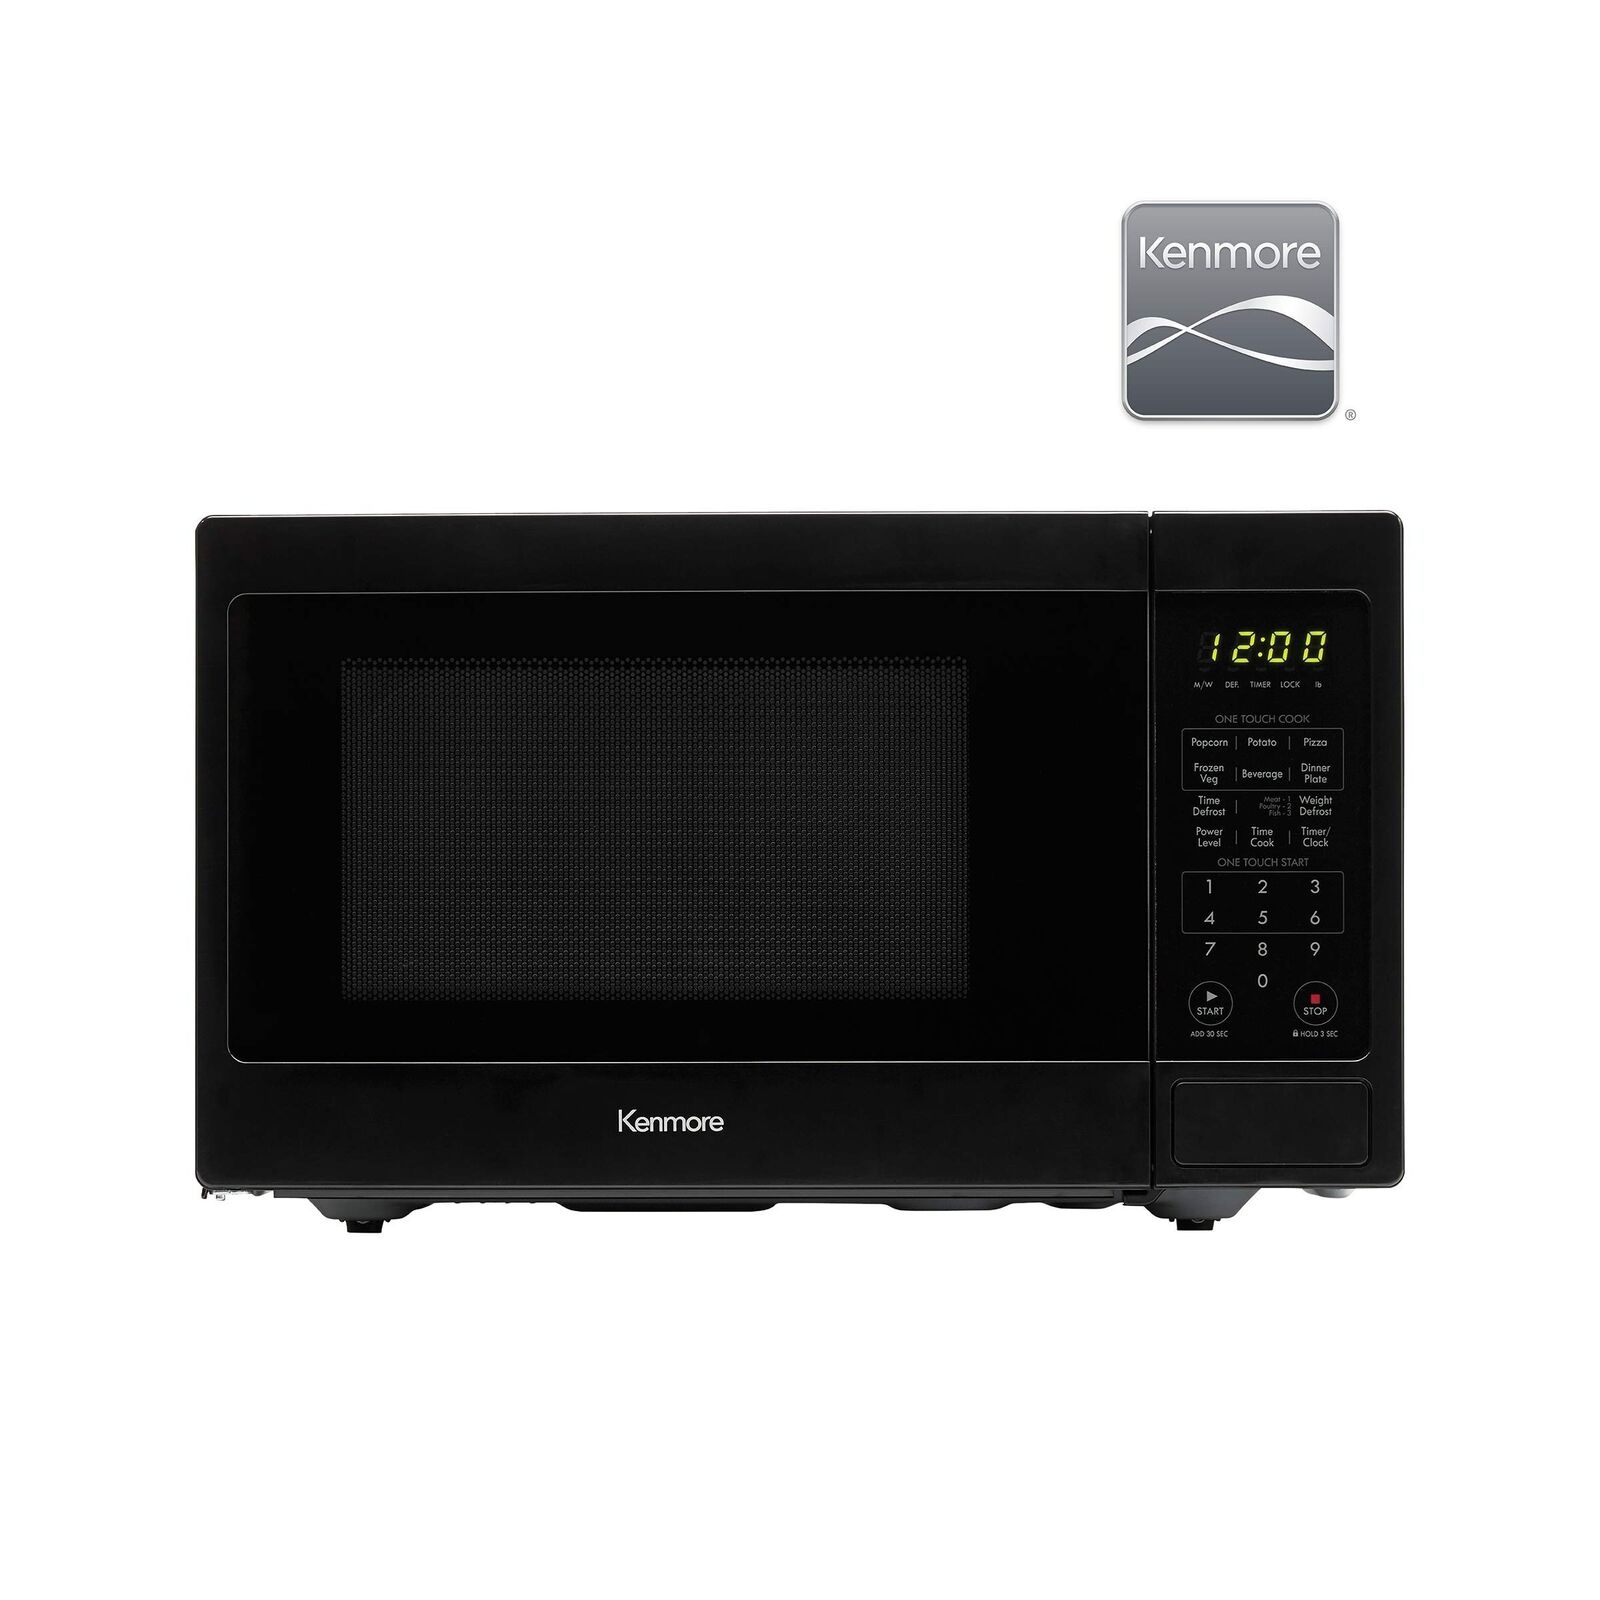 Kenmore 70929 Countertop Microwave Compact 0.9 Cu Feet 900w 10 Power Settings